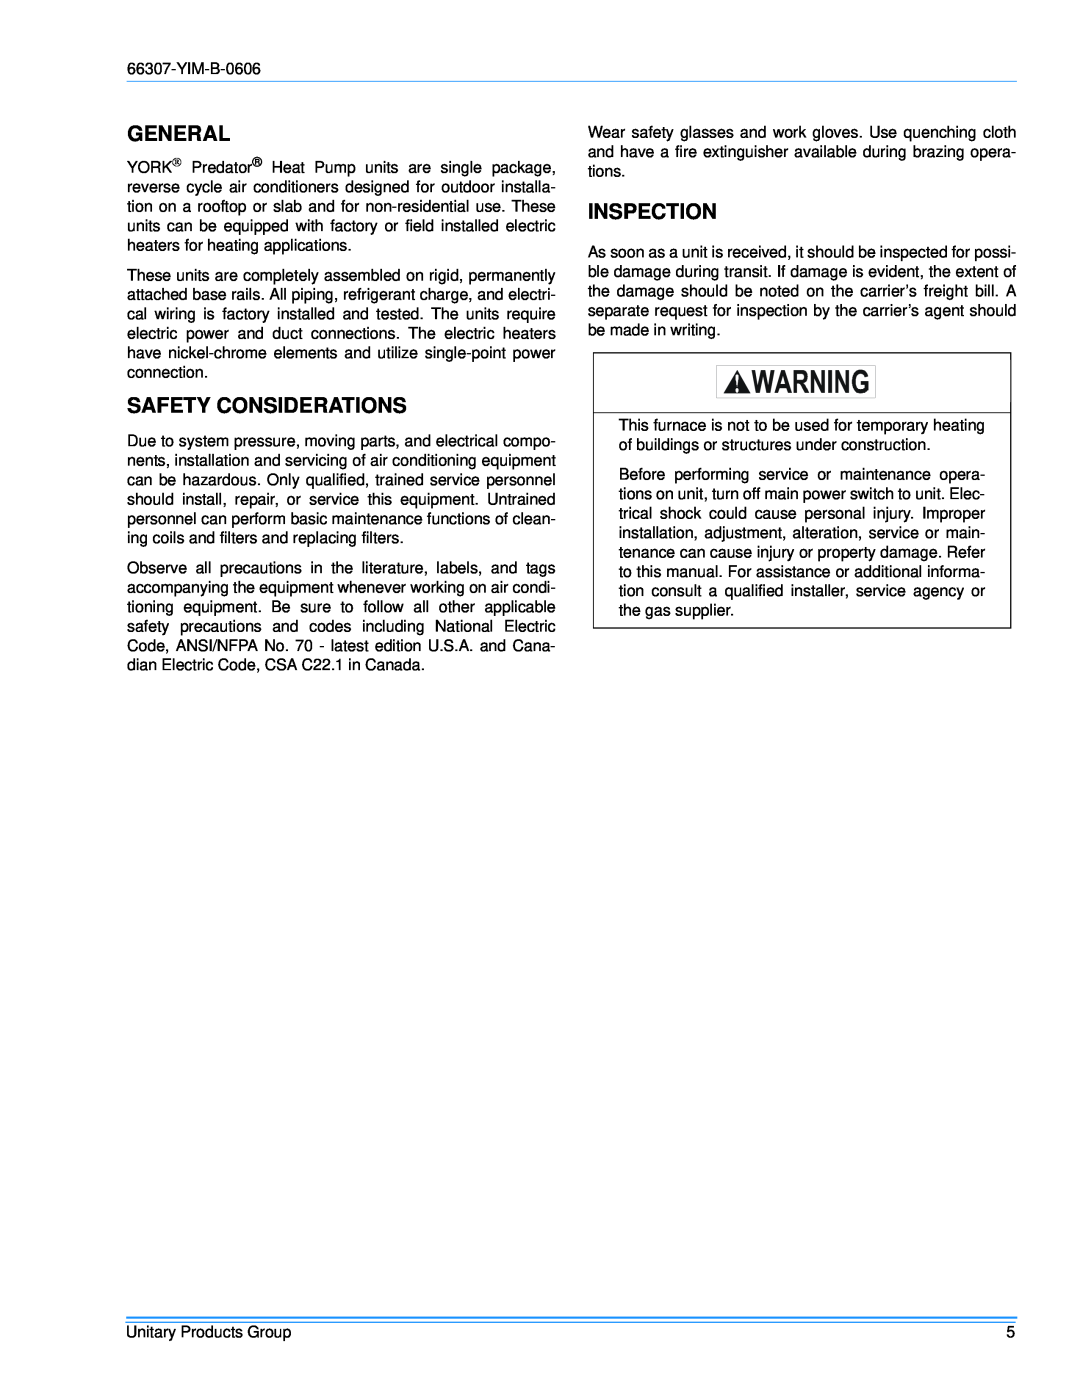 York BP120, BP 090 installation manual General, Safety Considerations, Inspection 